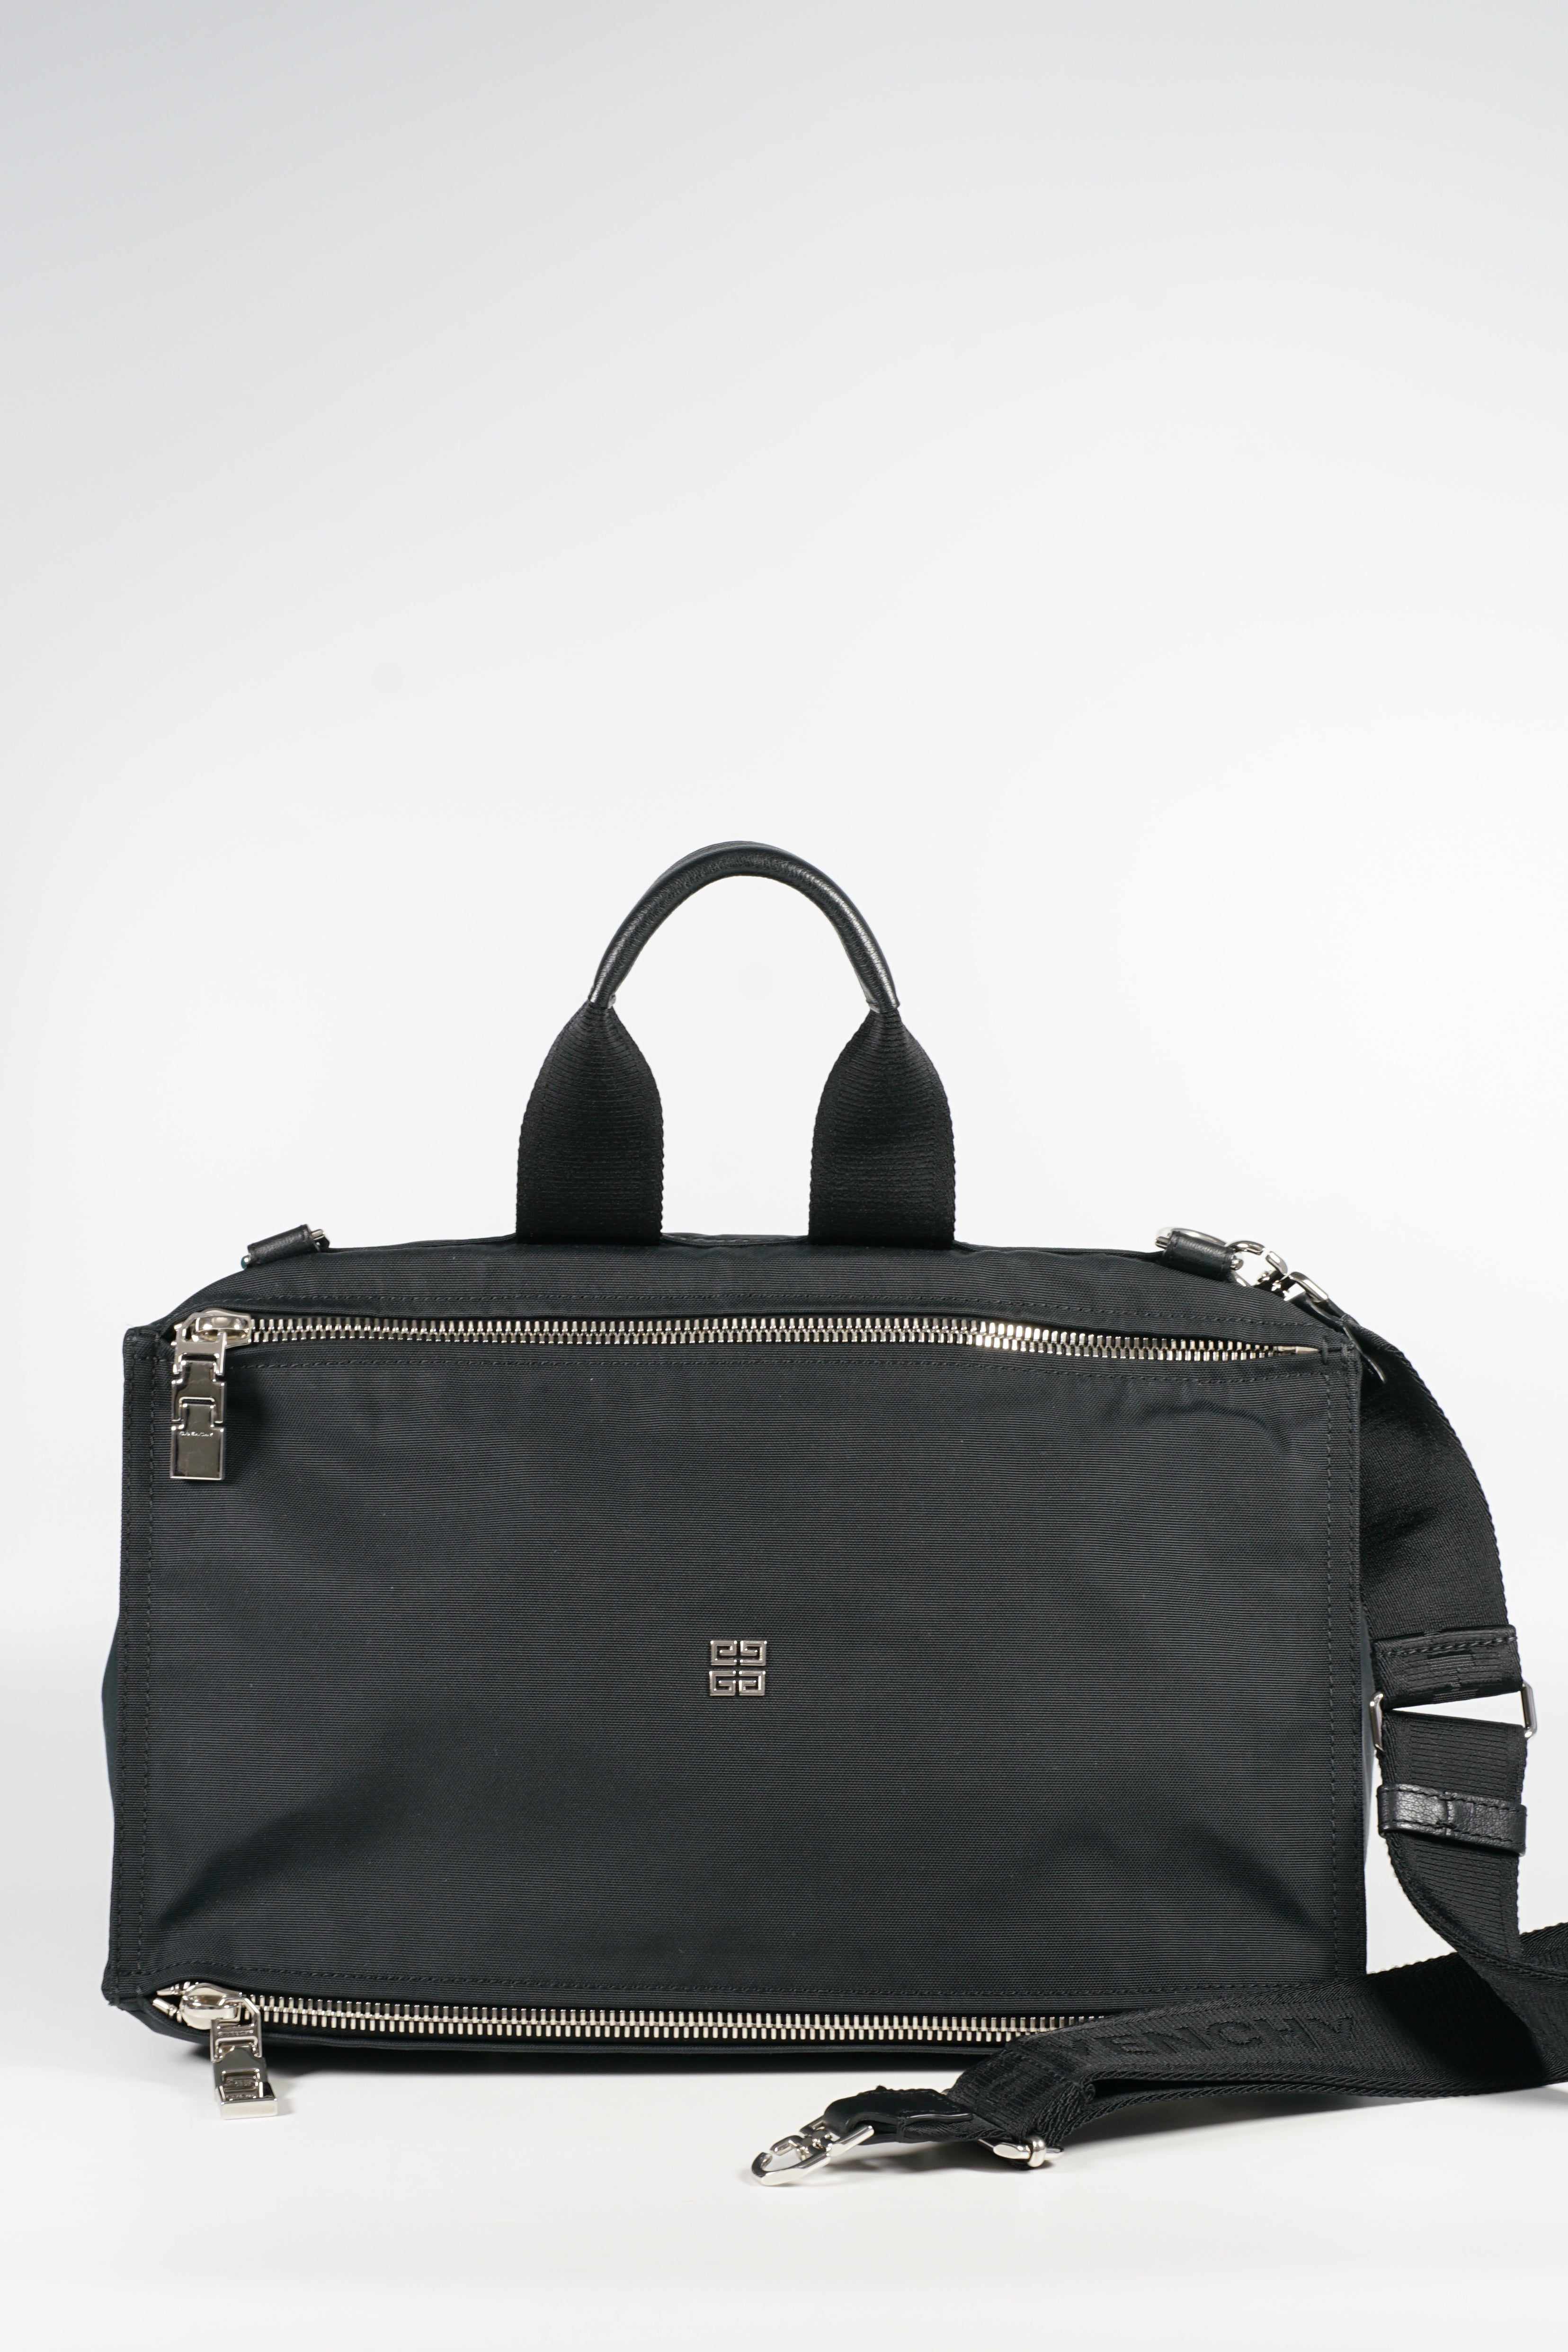 Givenchy Pandora Large in Black Nylon Body Bag